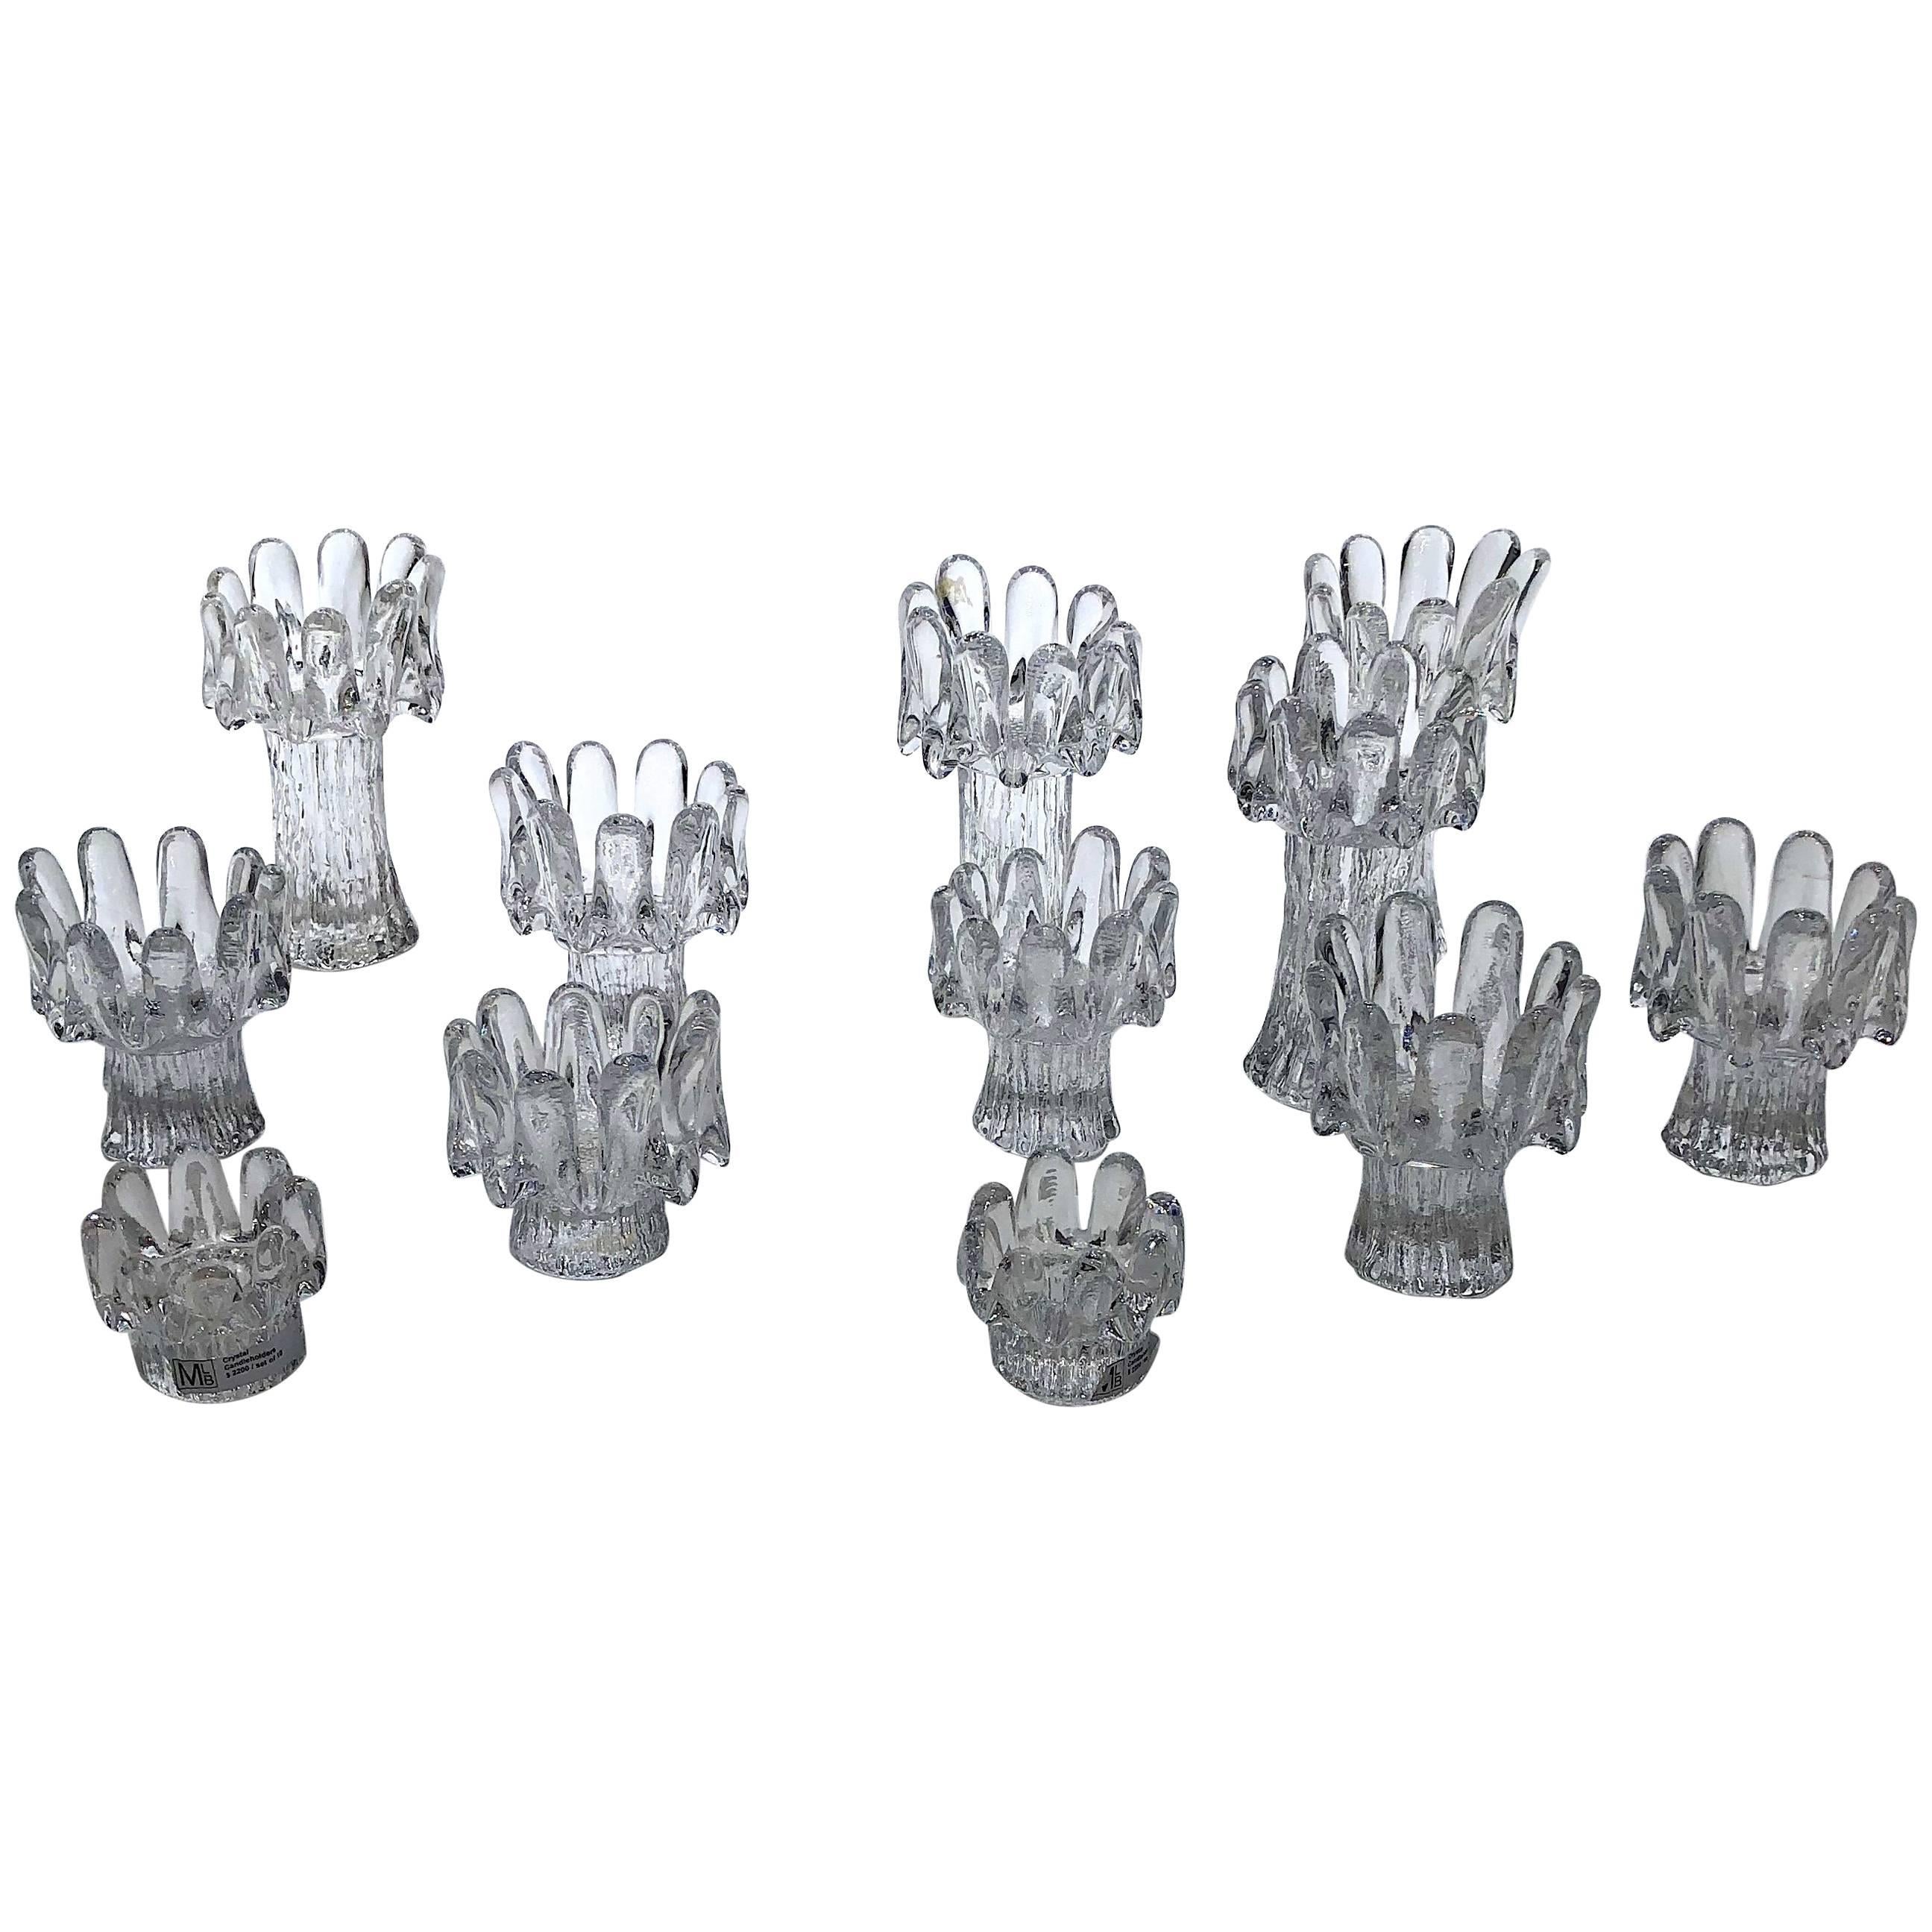 Set of 12 Crystal Candleholders